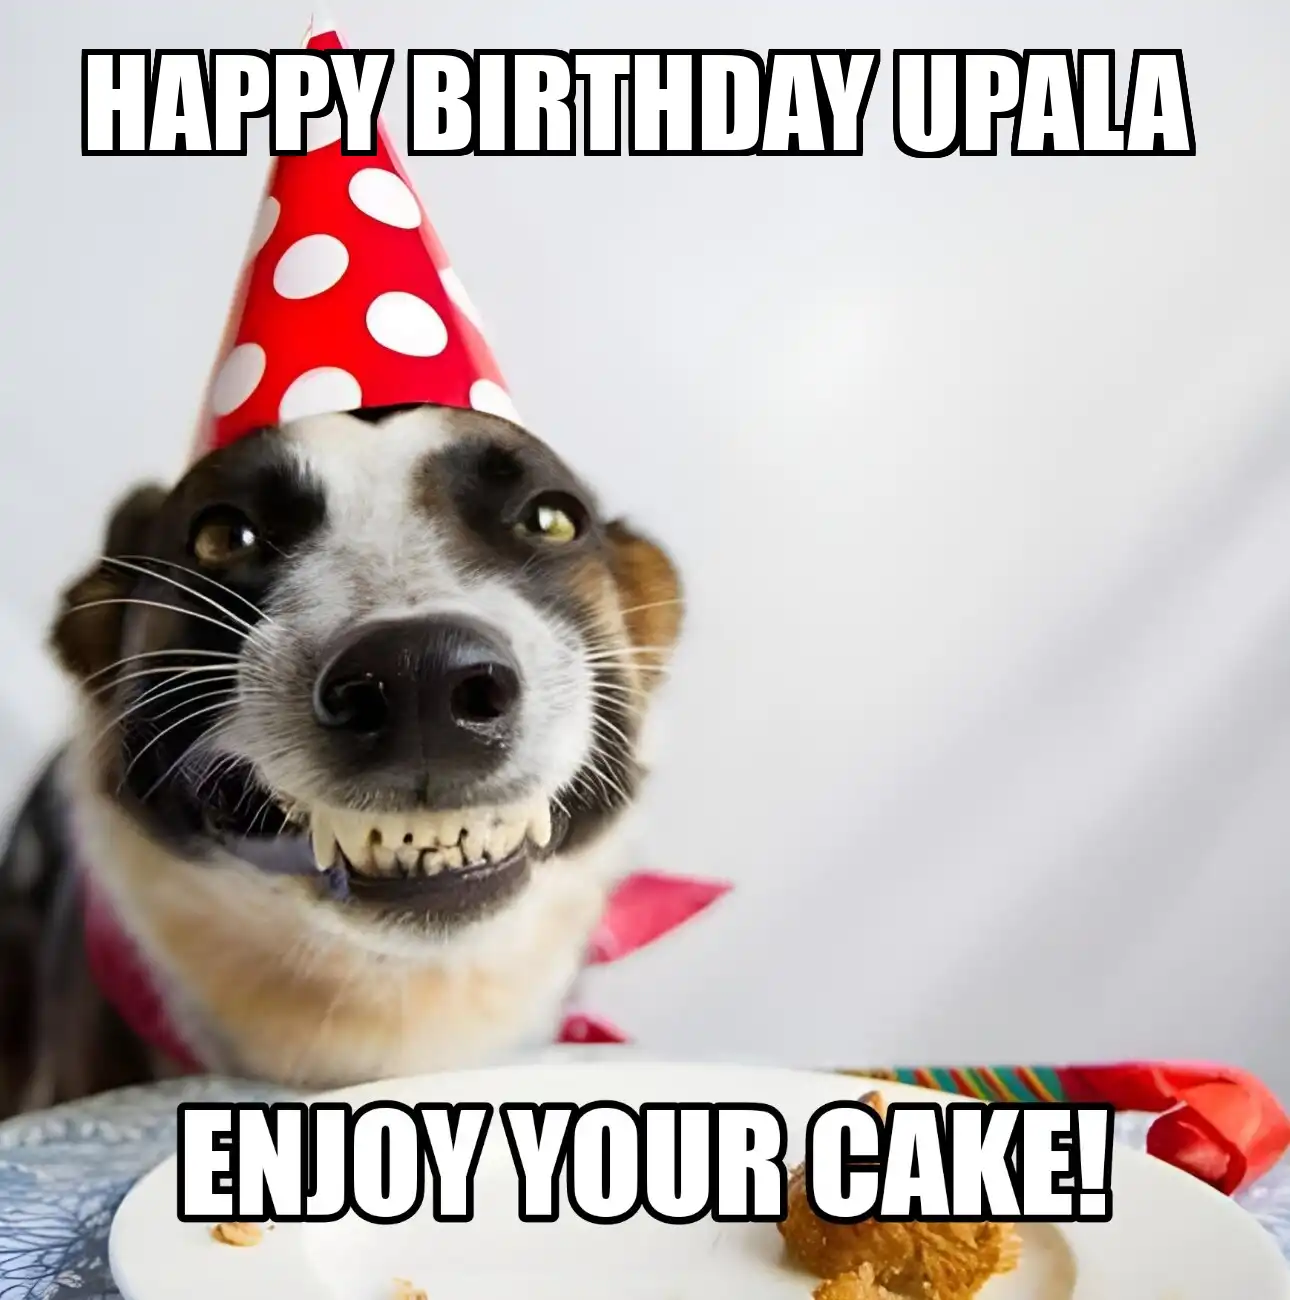 Happy Birthday Upala Enjoy Your Cake Dog Meme